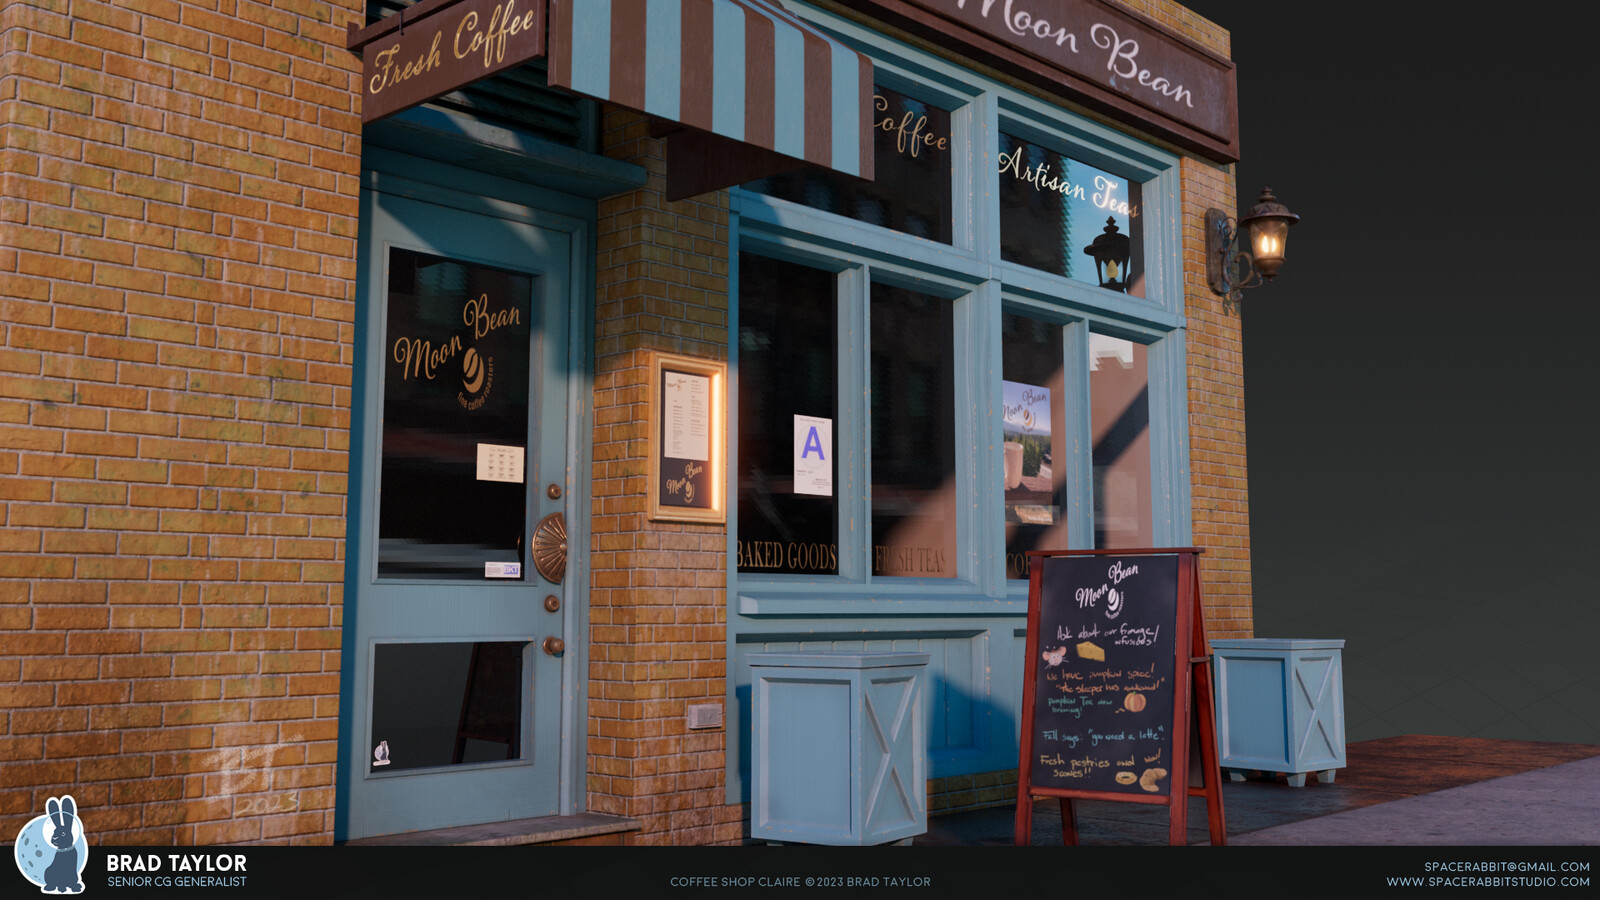 Coffee Shop Claire, Copyright Brad Taylor 2023